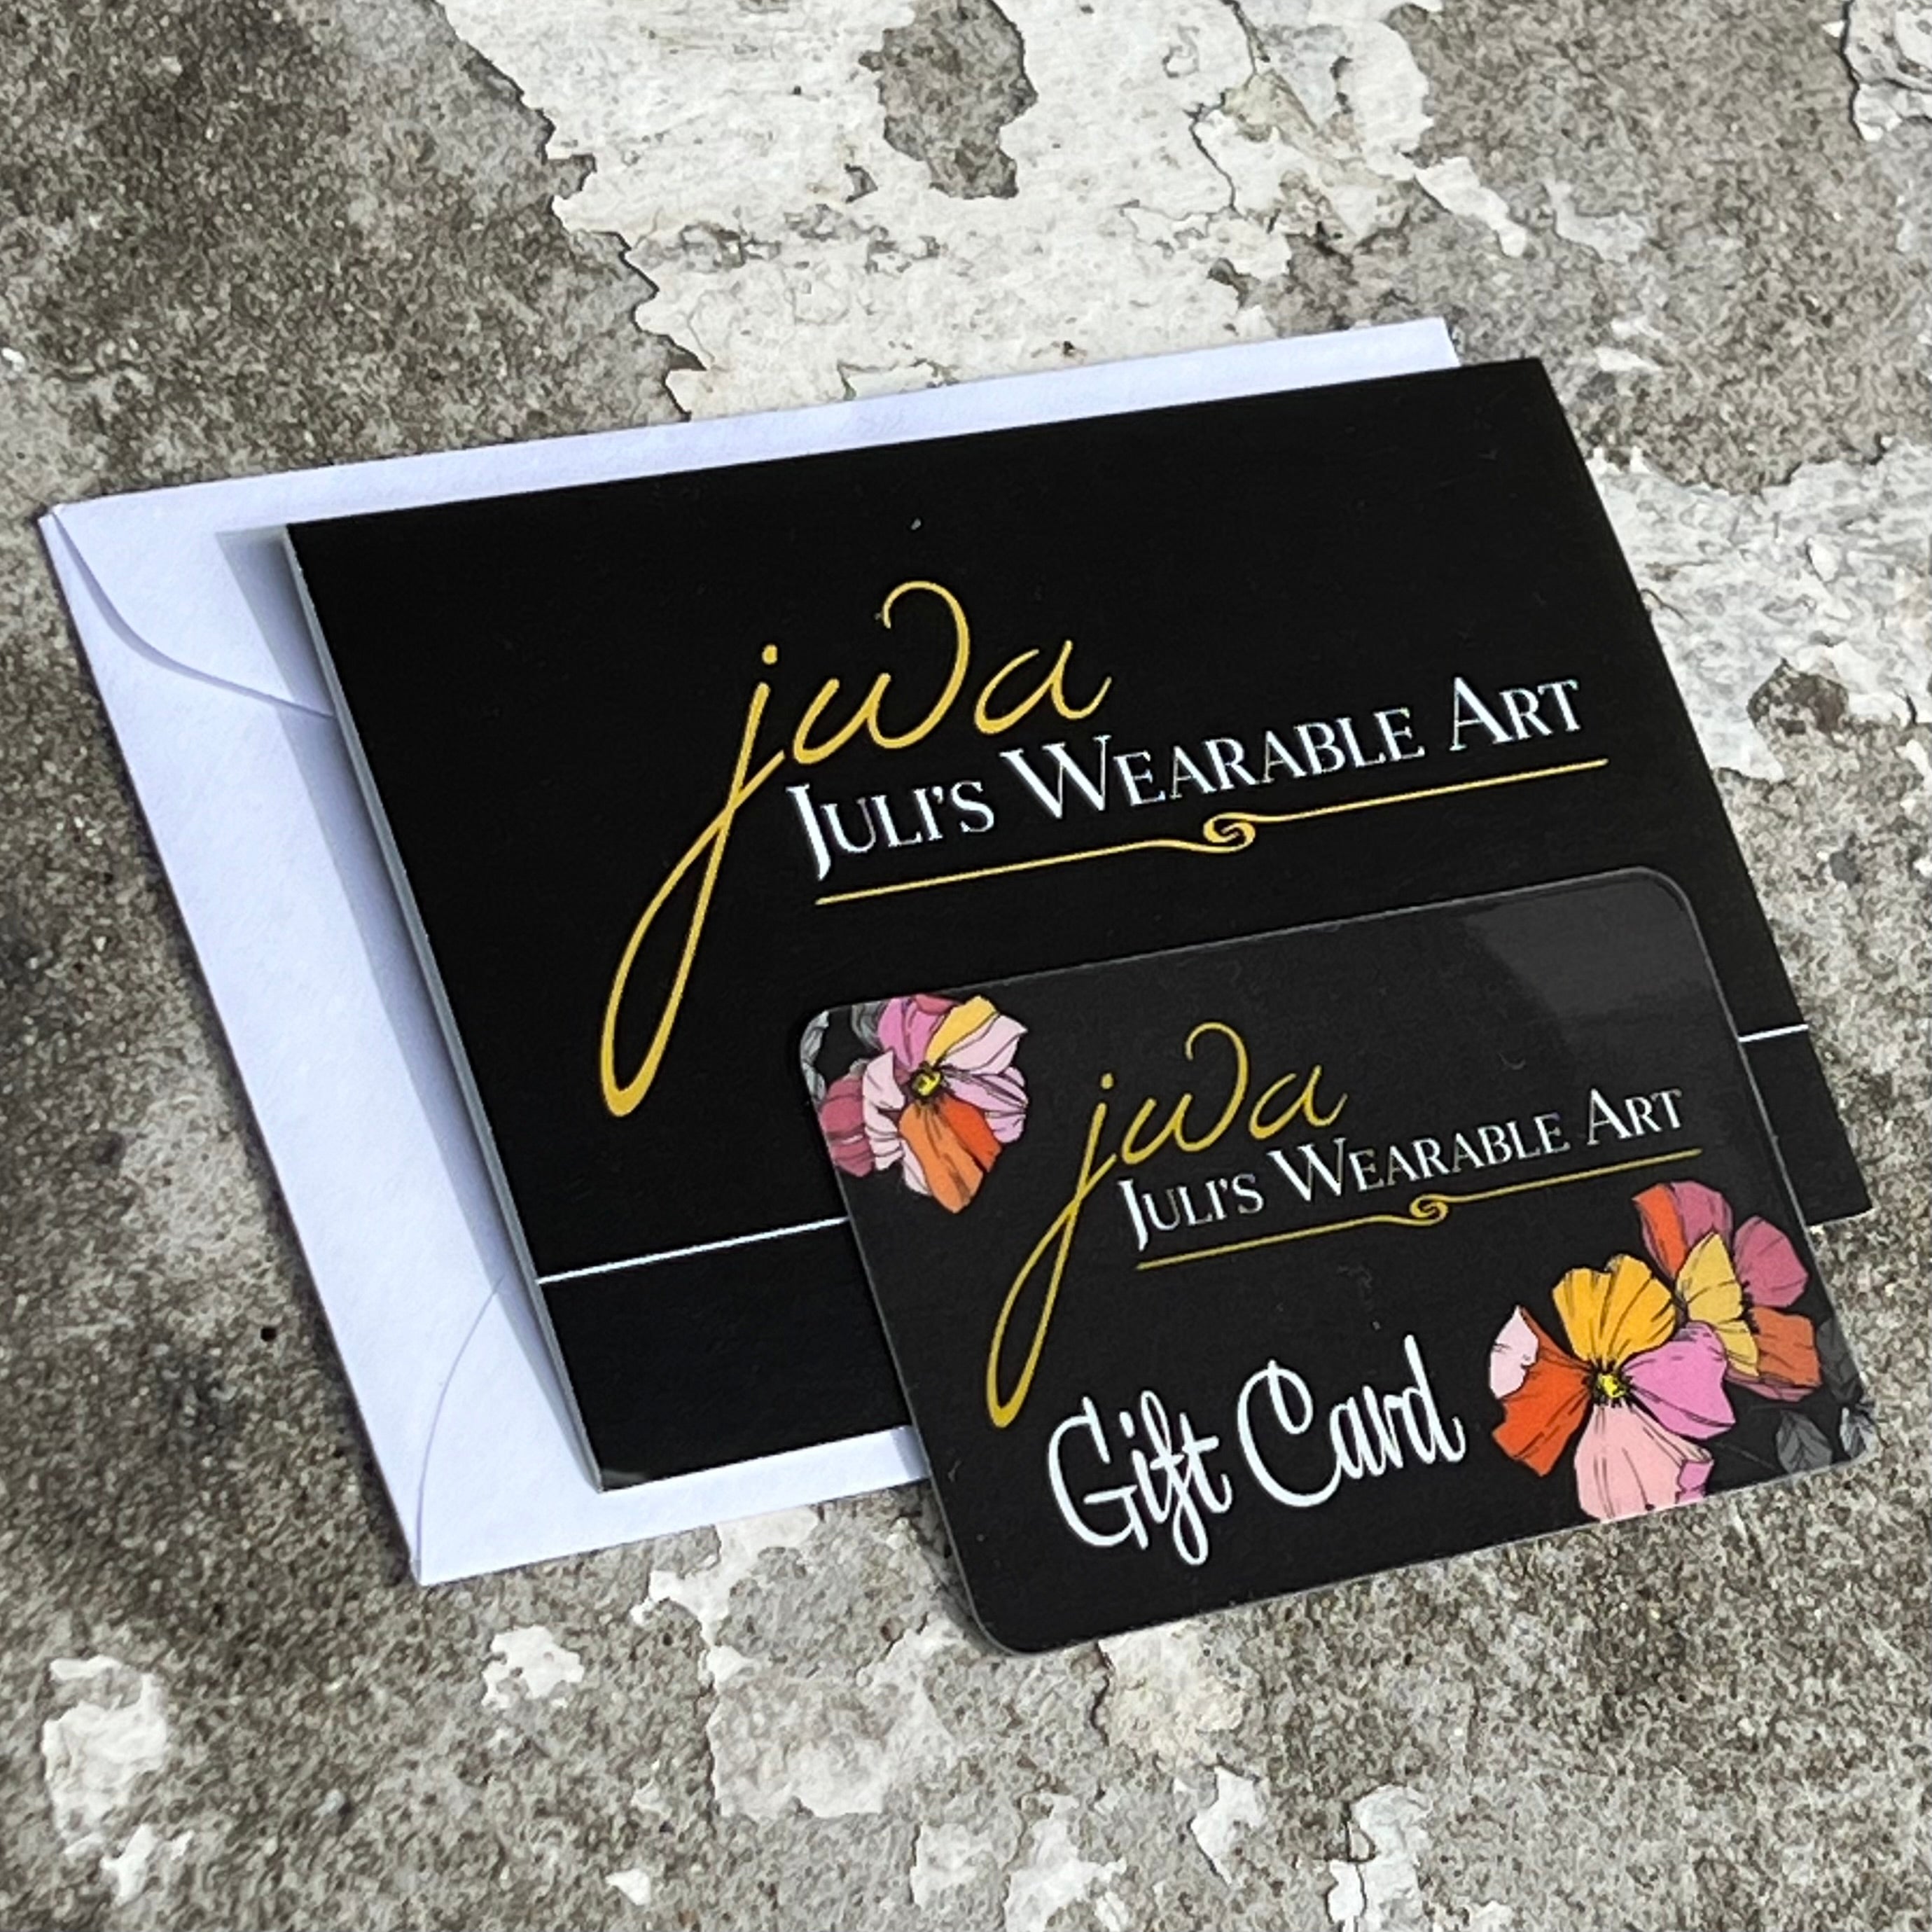 Juli’s Wearable Art Gift Cards